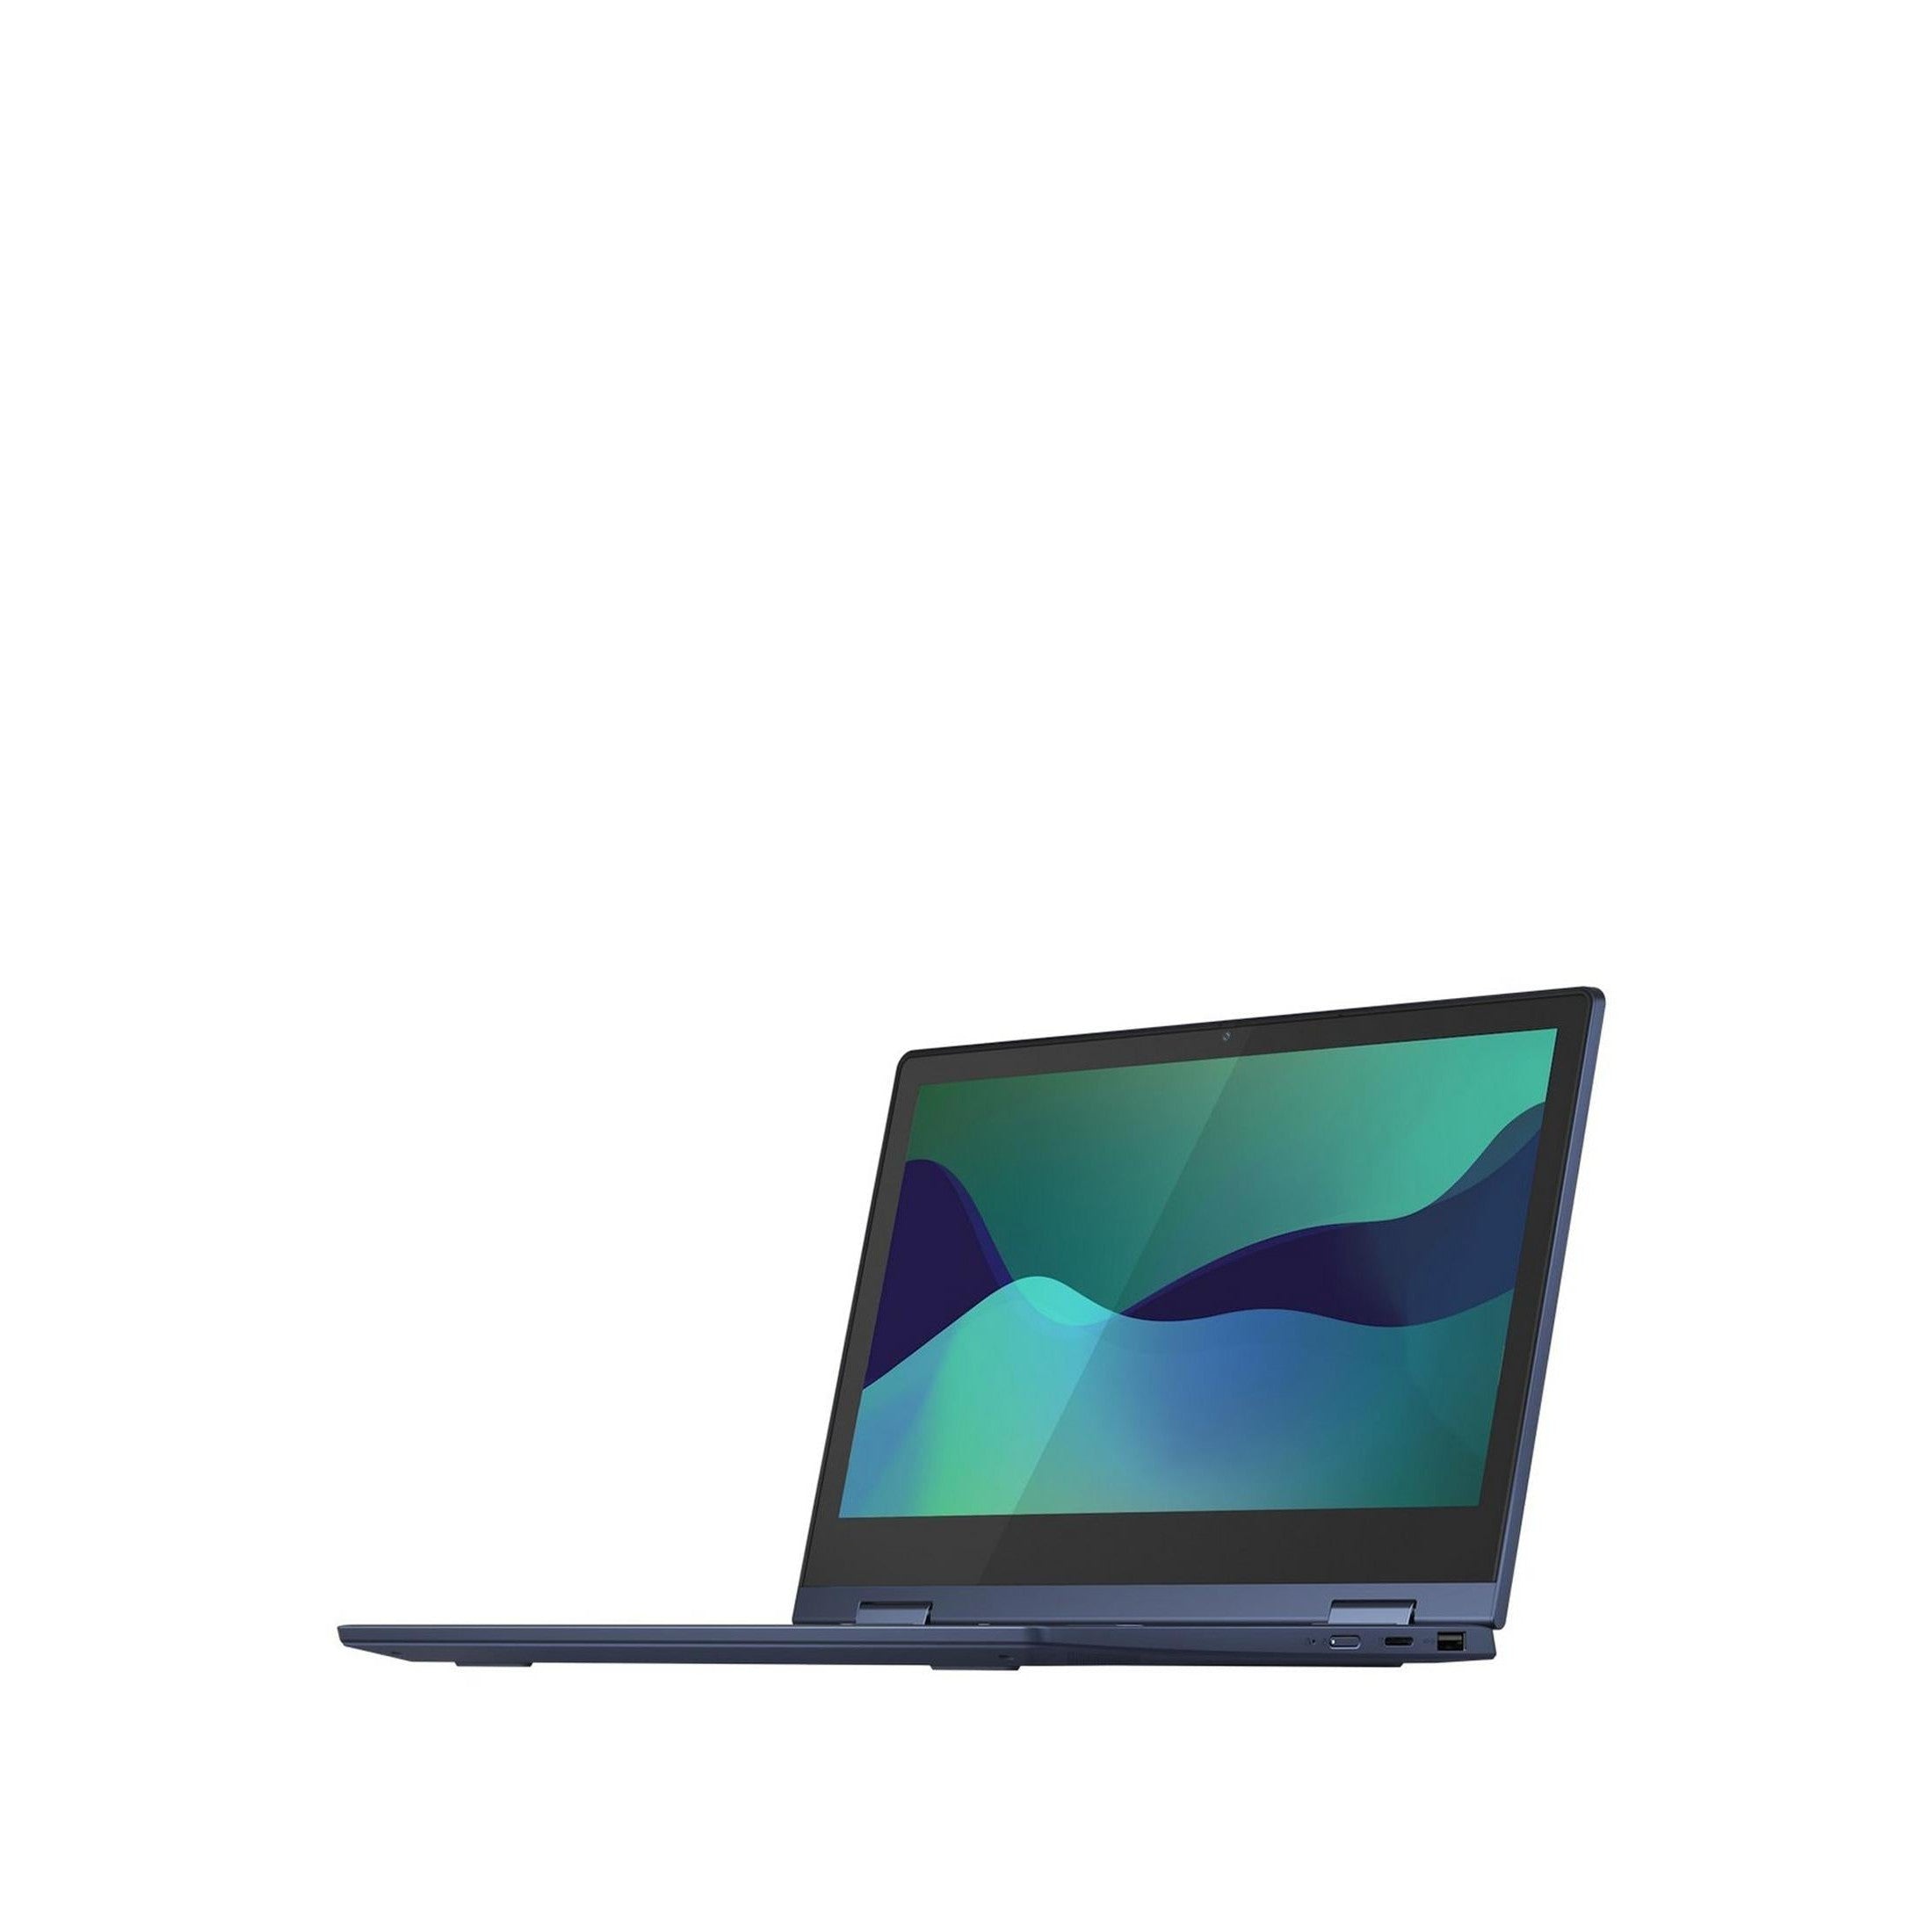 Lenovo IdeaPad Flex 3i 11.6" Chromebook - Intel Celeron, 4GB RAM, 64GB eMMC, Blue - Refurbished Excellent